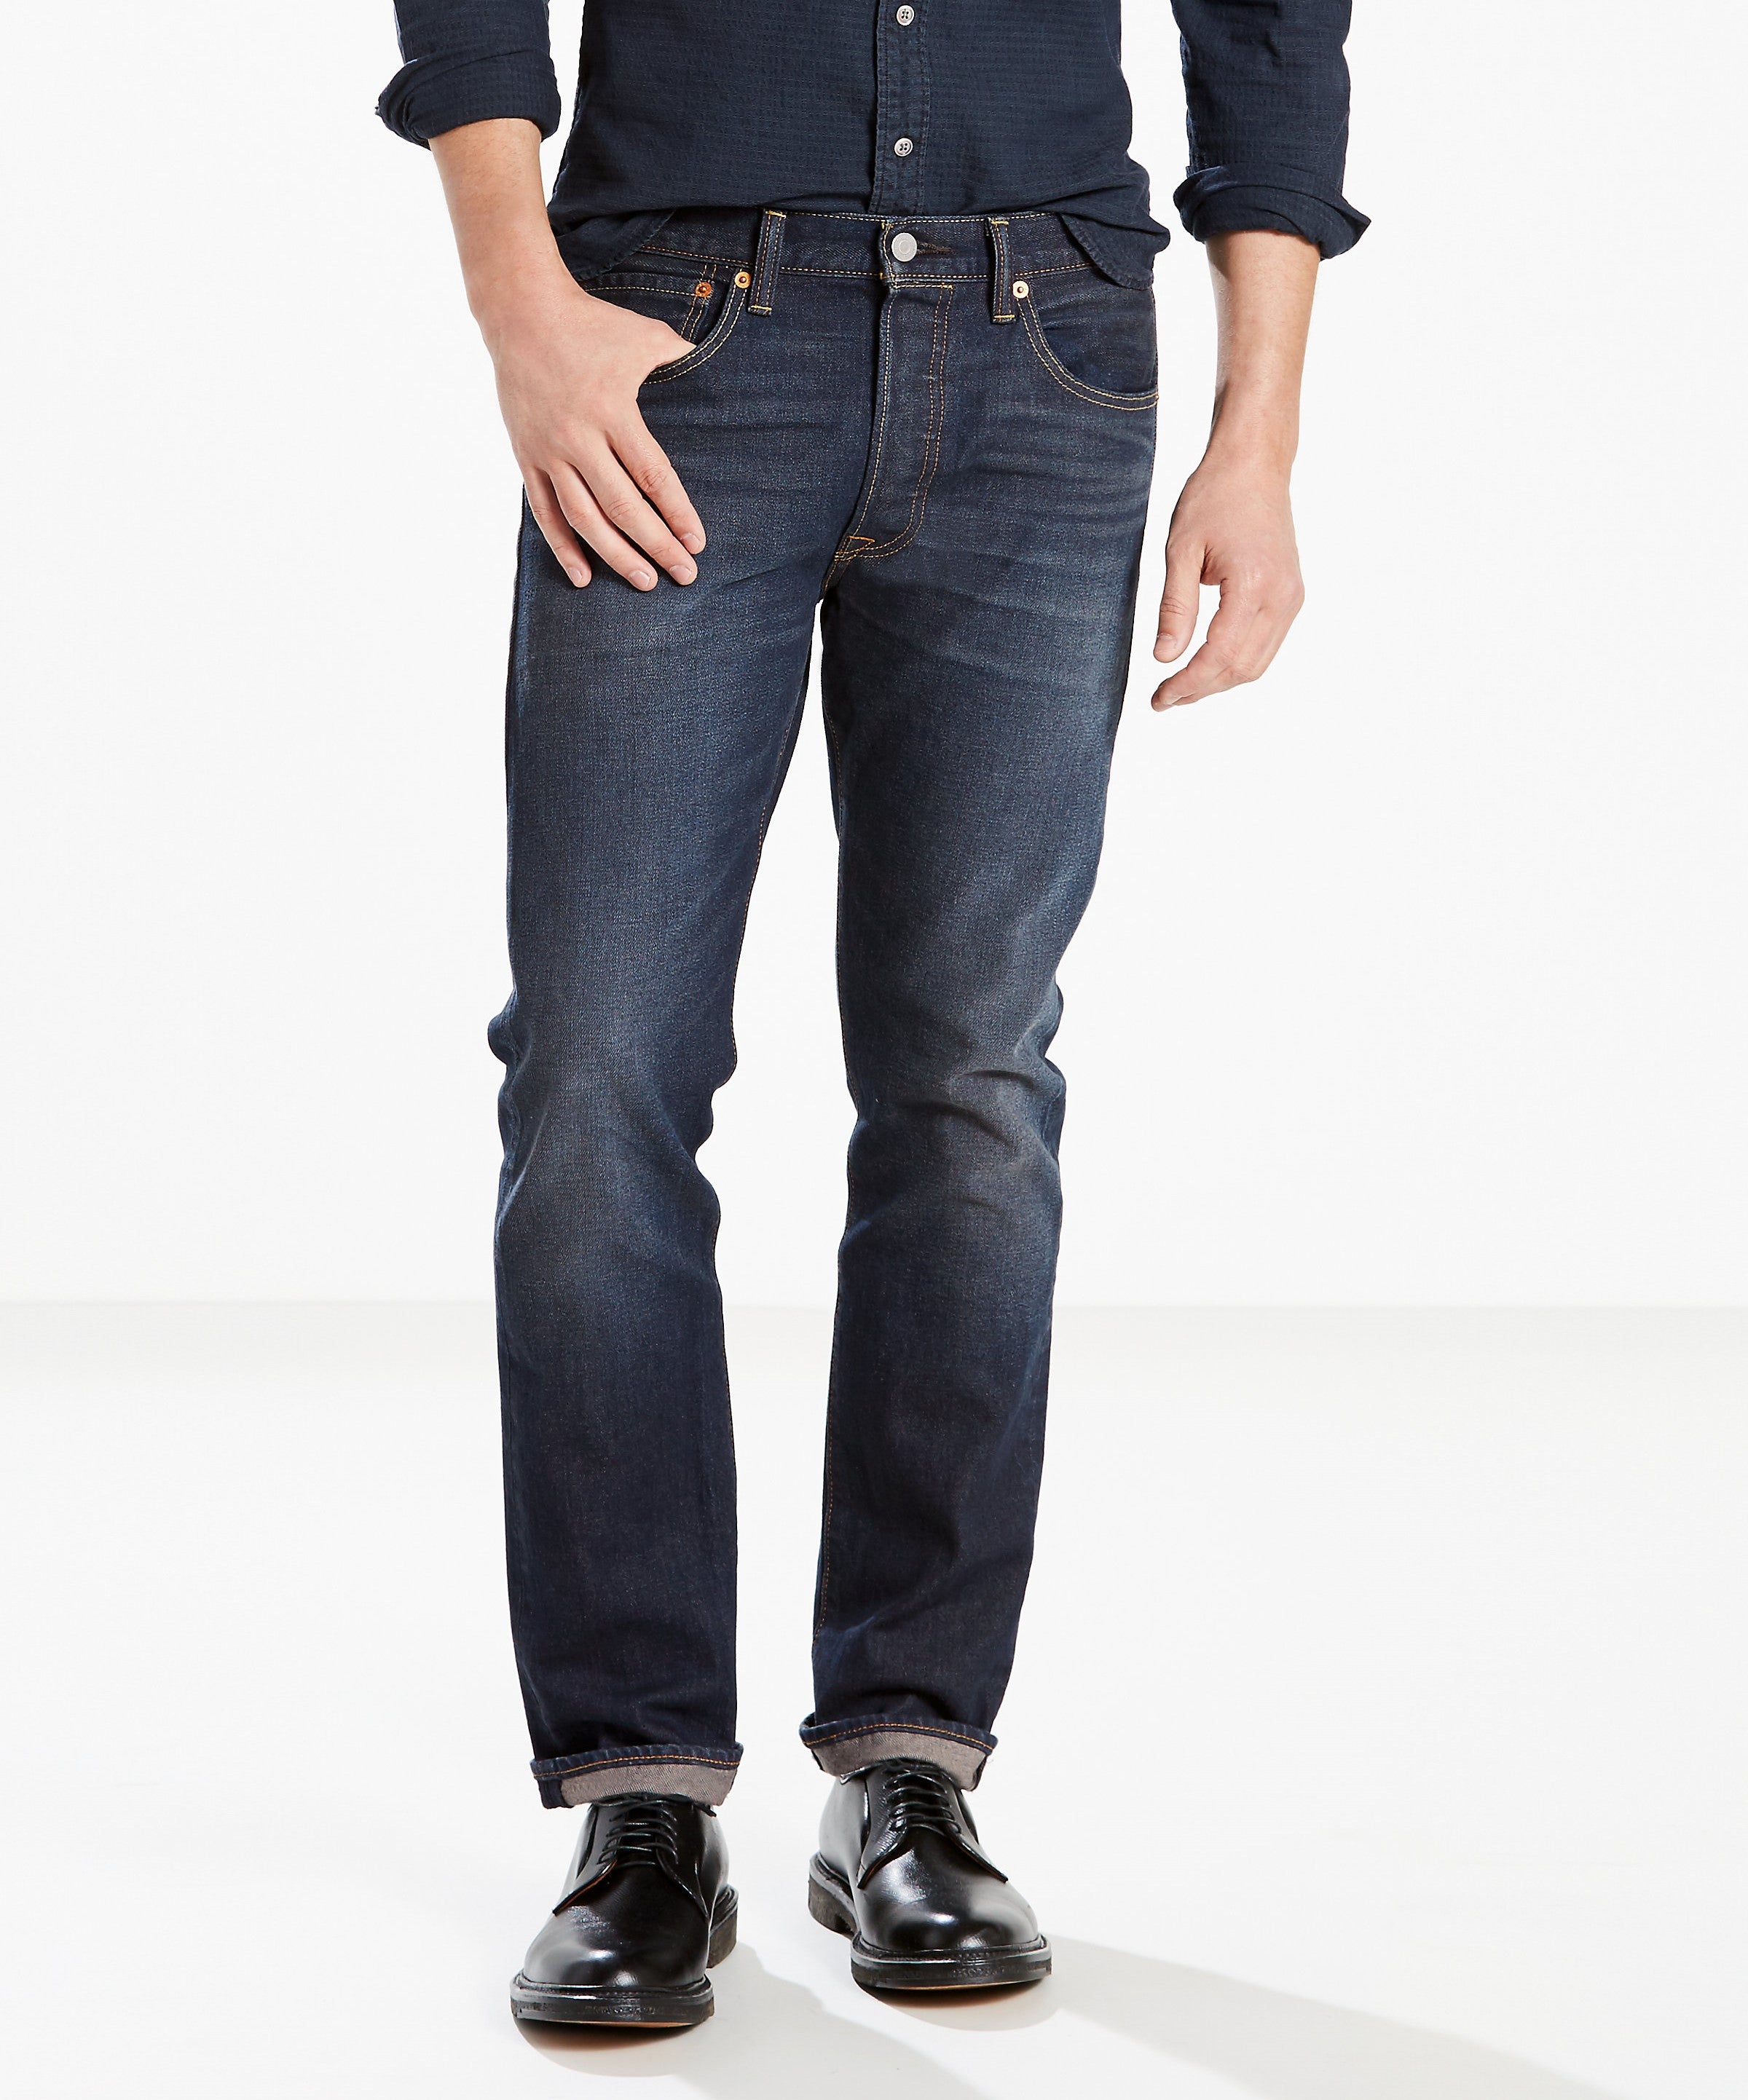 pantalon-jeans-levis-501-straigh-p-caballeros